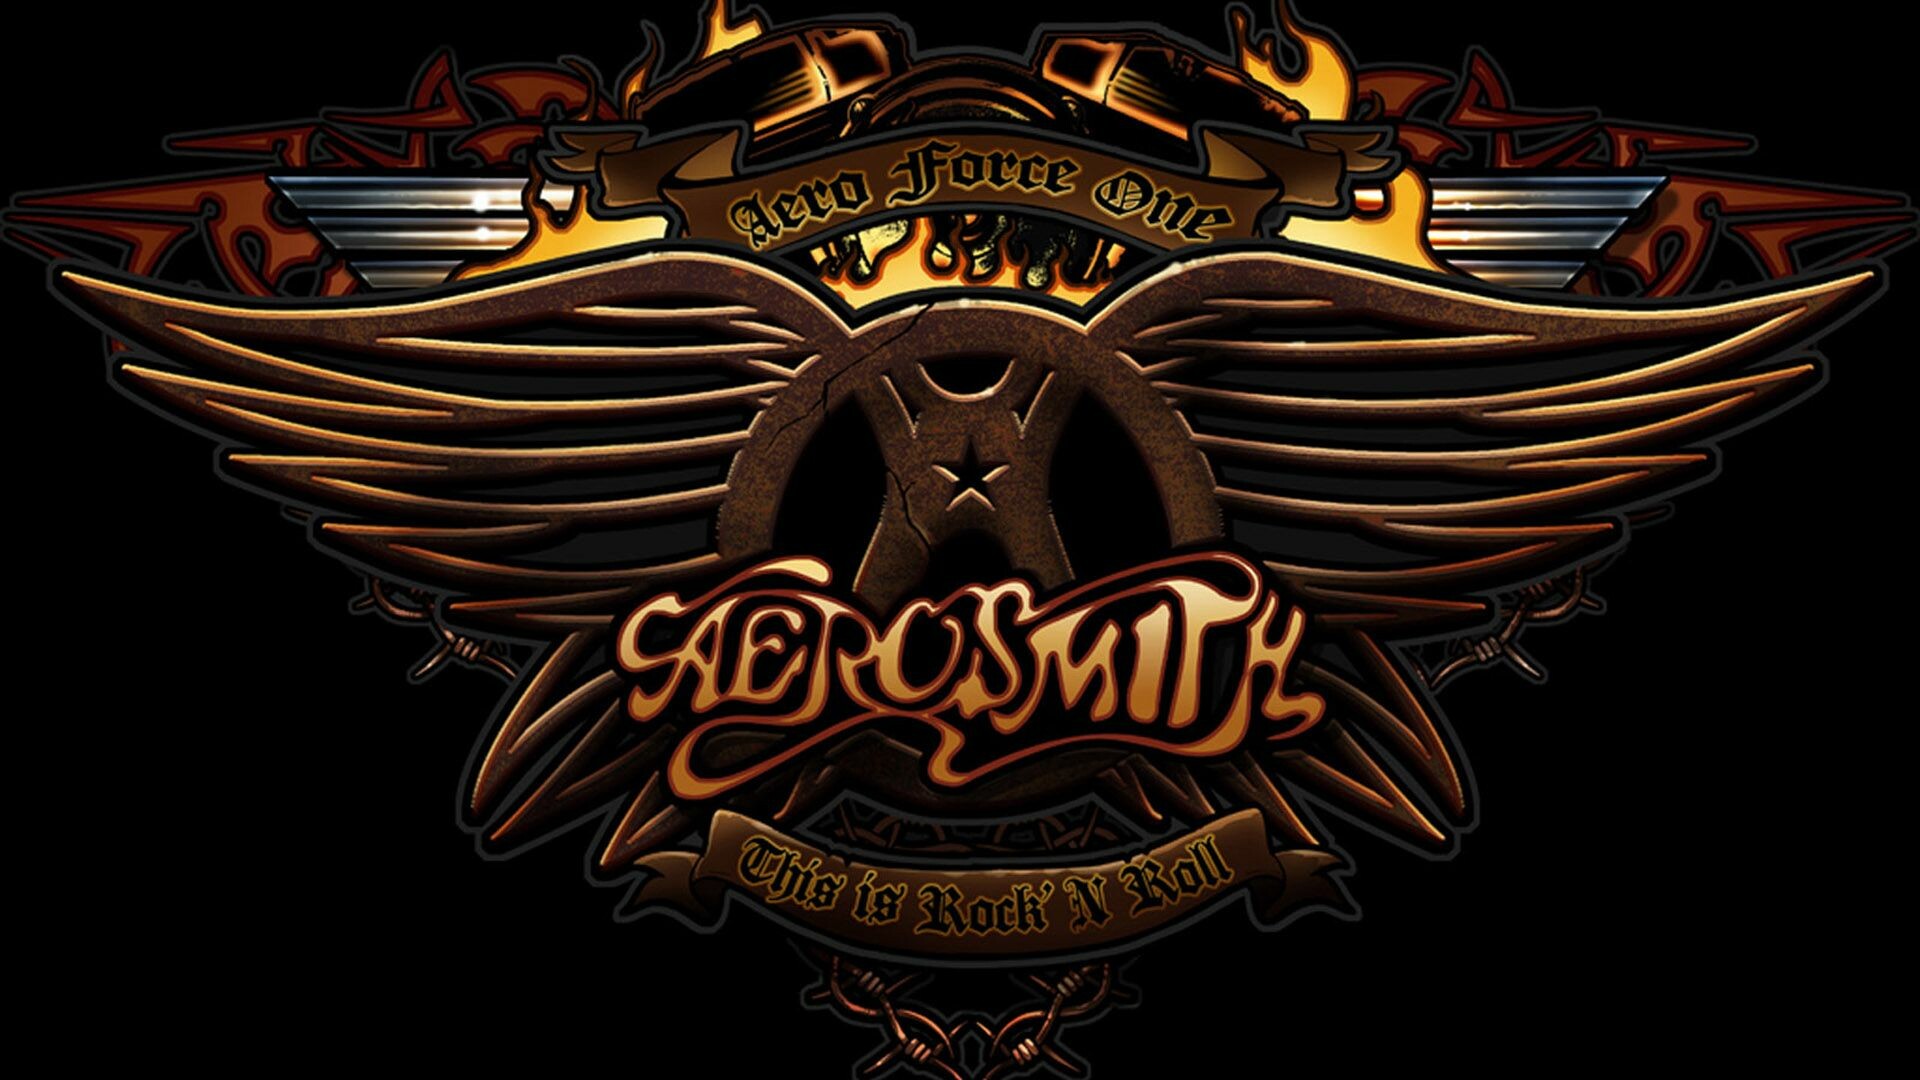 Aerosmith: Rock n roll, Aero Force One is the fan club for the band. 1920x1080 Full HD Background.